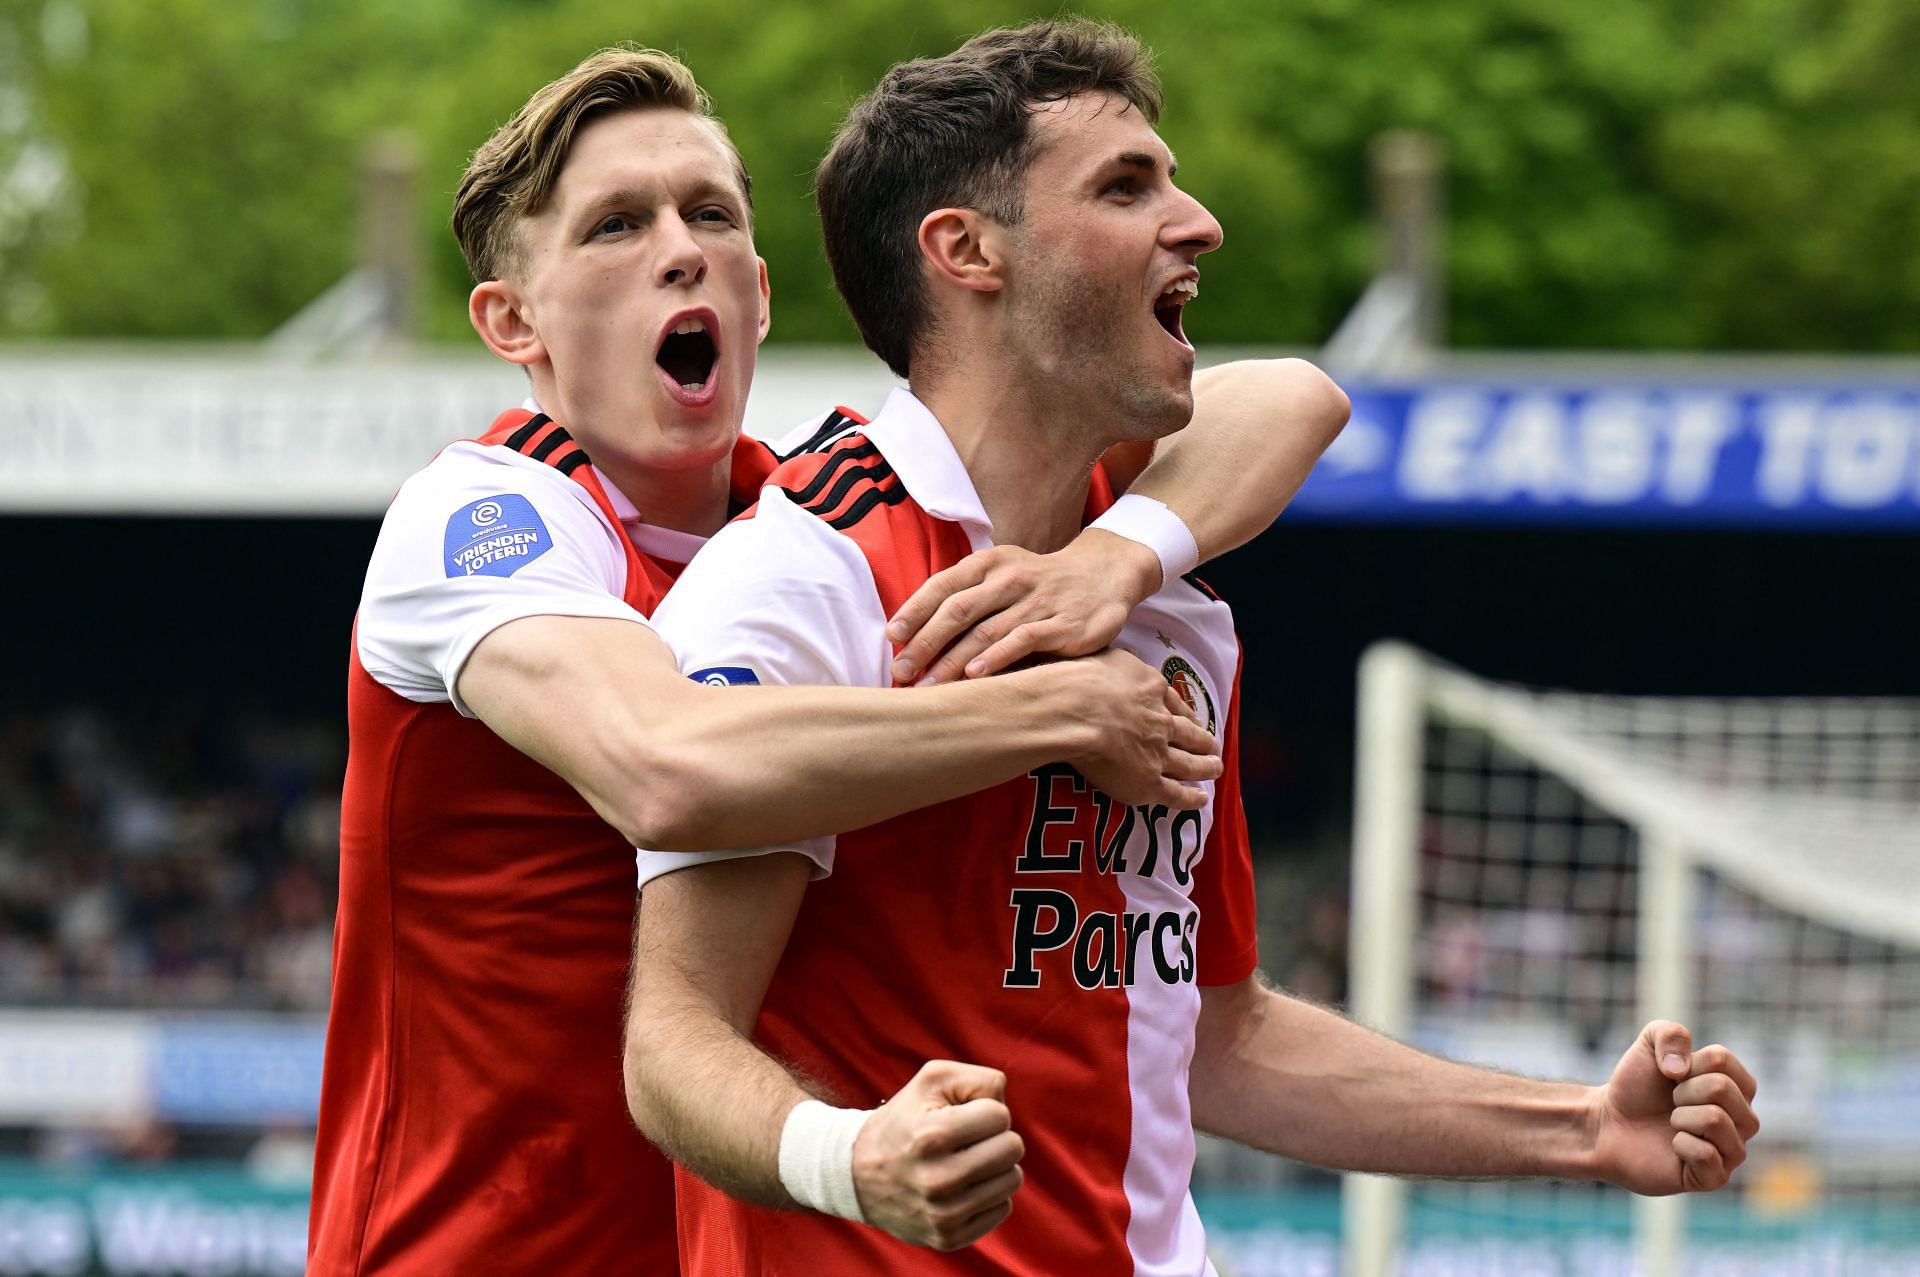 Feyenoord will host Go Ahead Eagles on Sunday